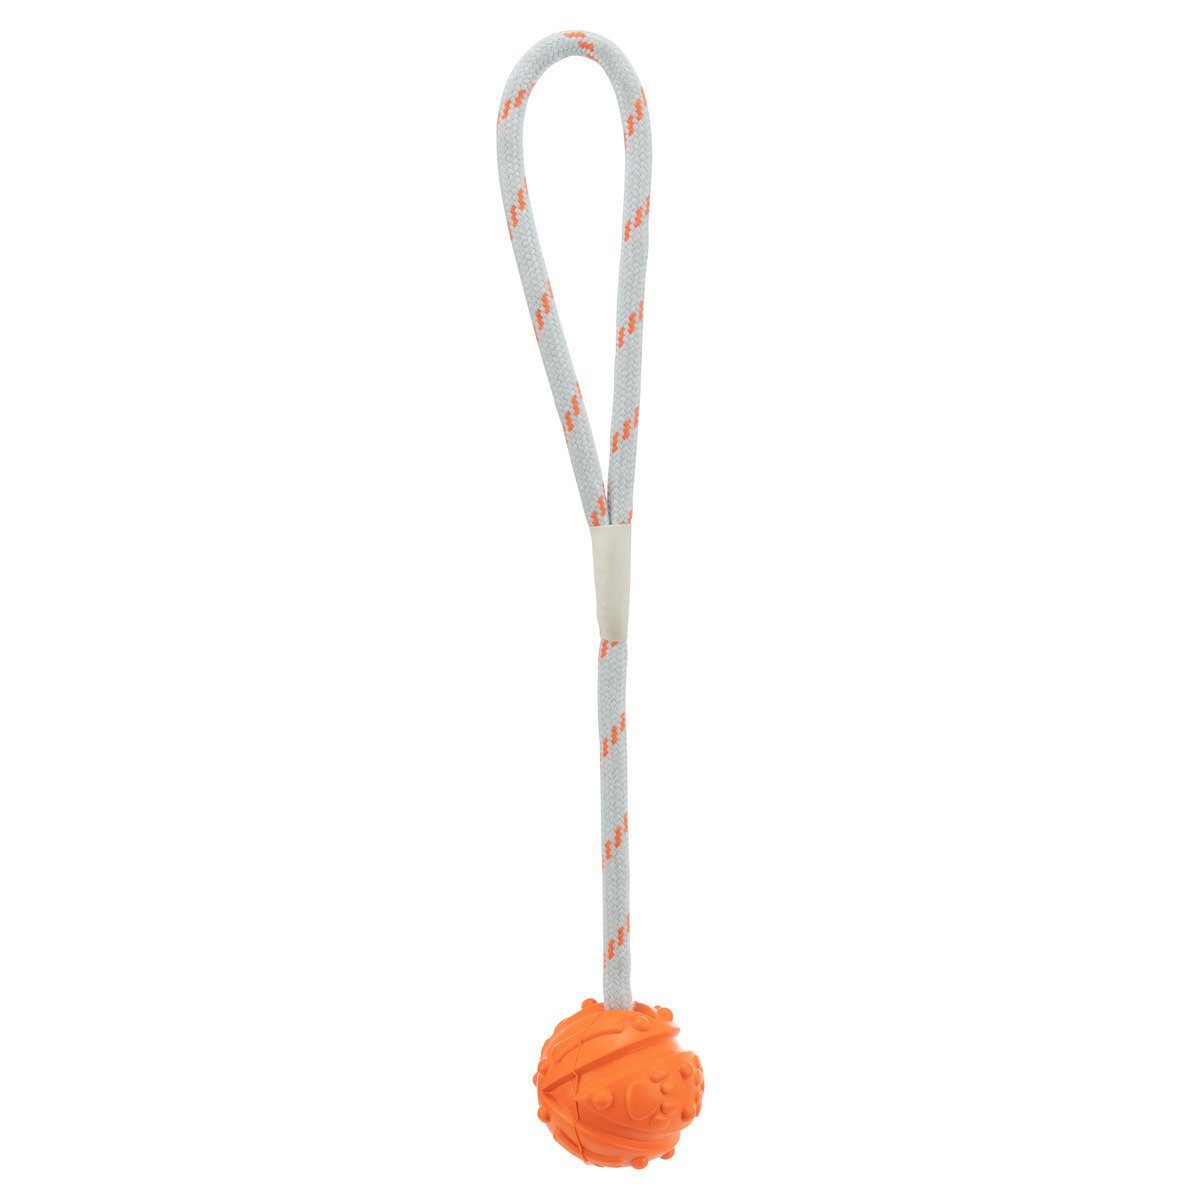 TRIXIE Spielknochen Ball am Seil, schwimmt, Naturgummi, Maße: ø 4,5 cm / 35 cm / Farbe: orange